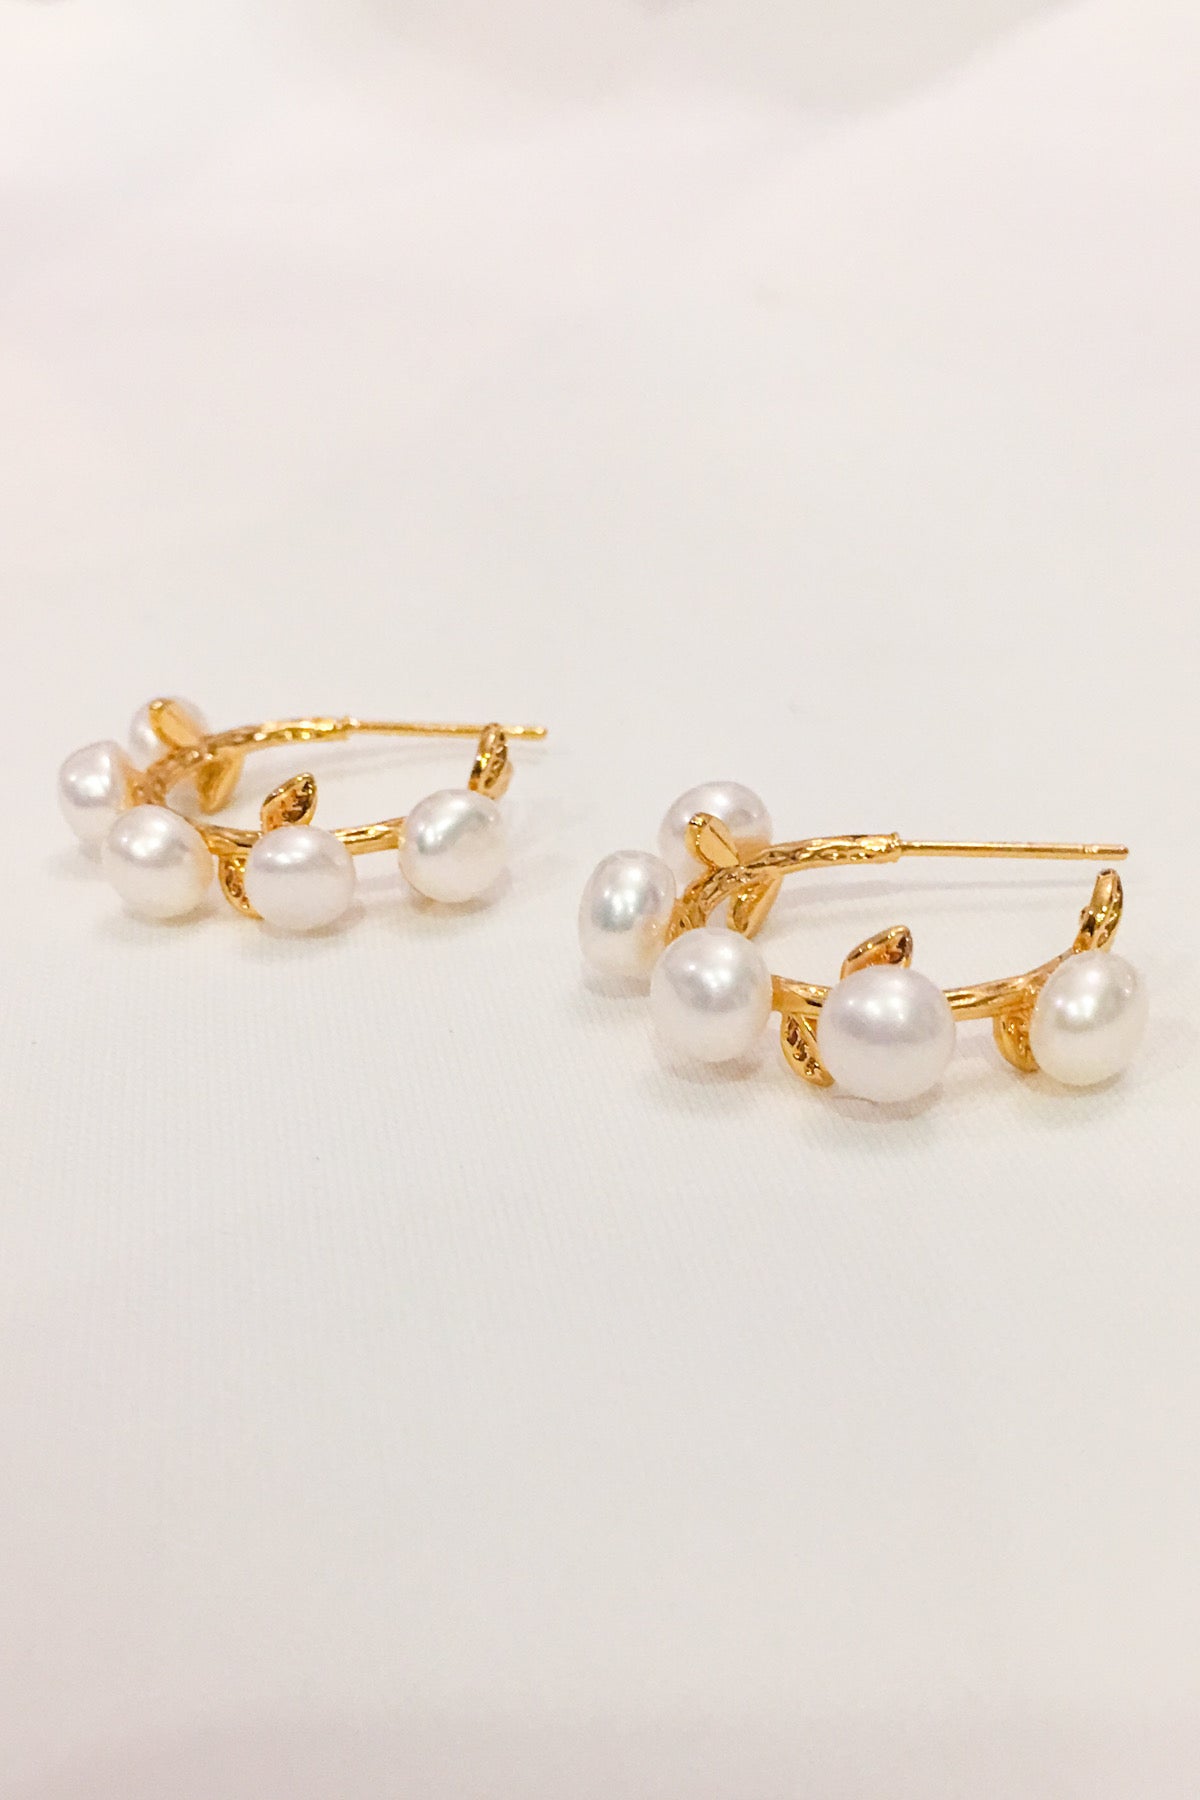 SKYE San Francisco Shop SF Chic Modern Elegant Classy Women Jewelry French Parisian Minimalist Clarice 18K Gold Pearl Hoop Earrings 4